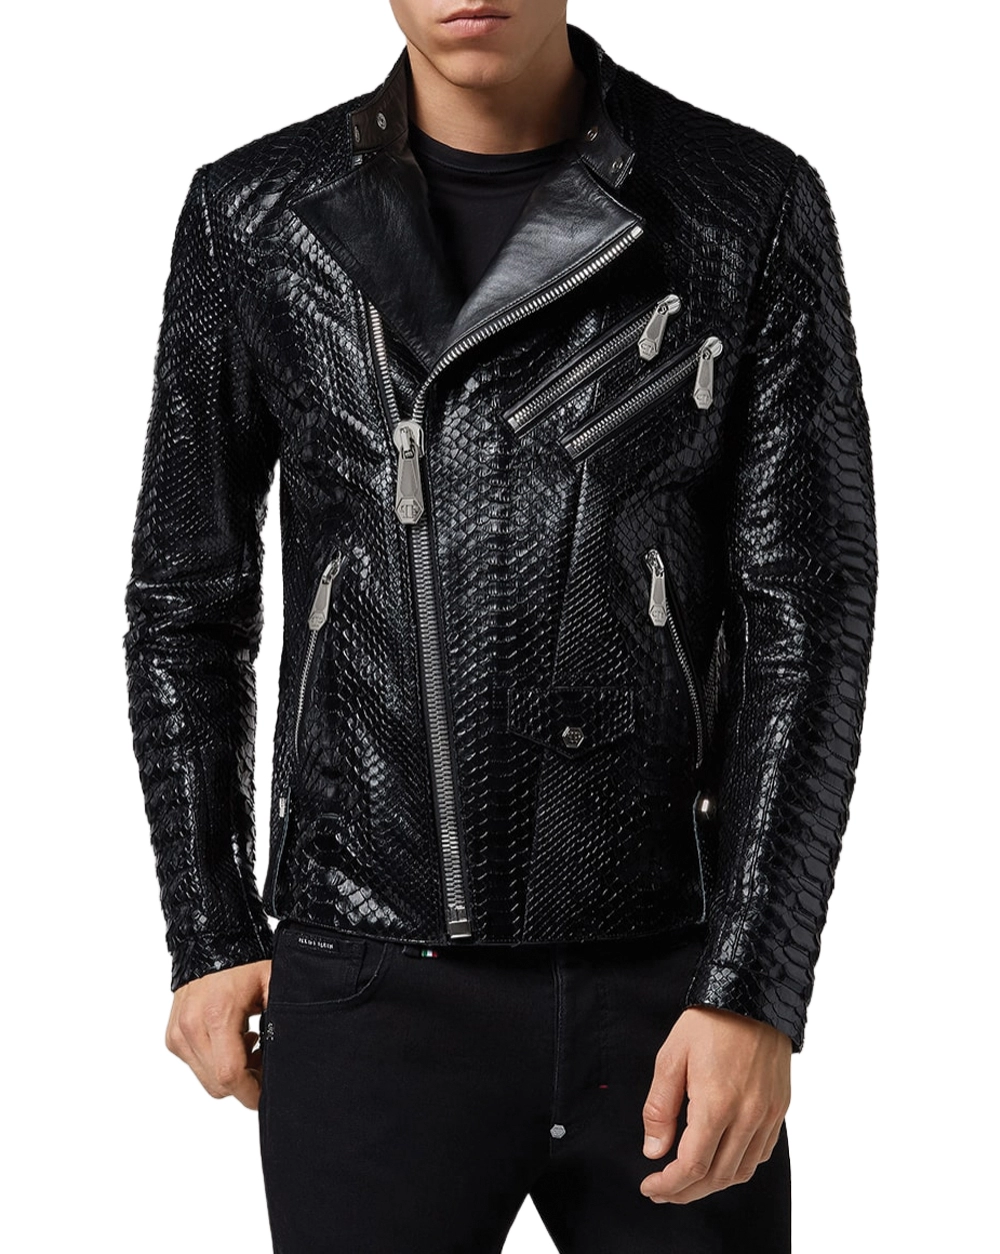 Real leather biker jacket in Black Python affects